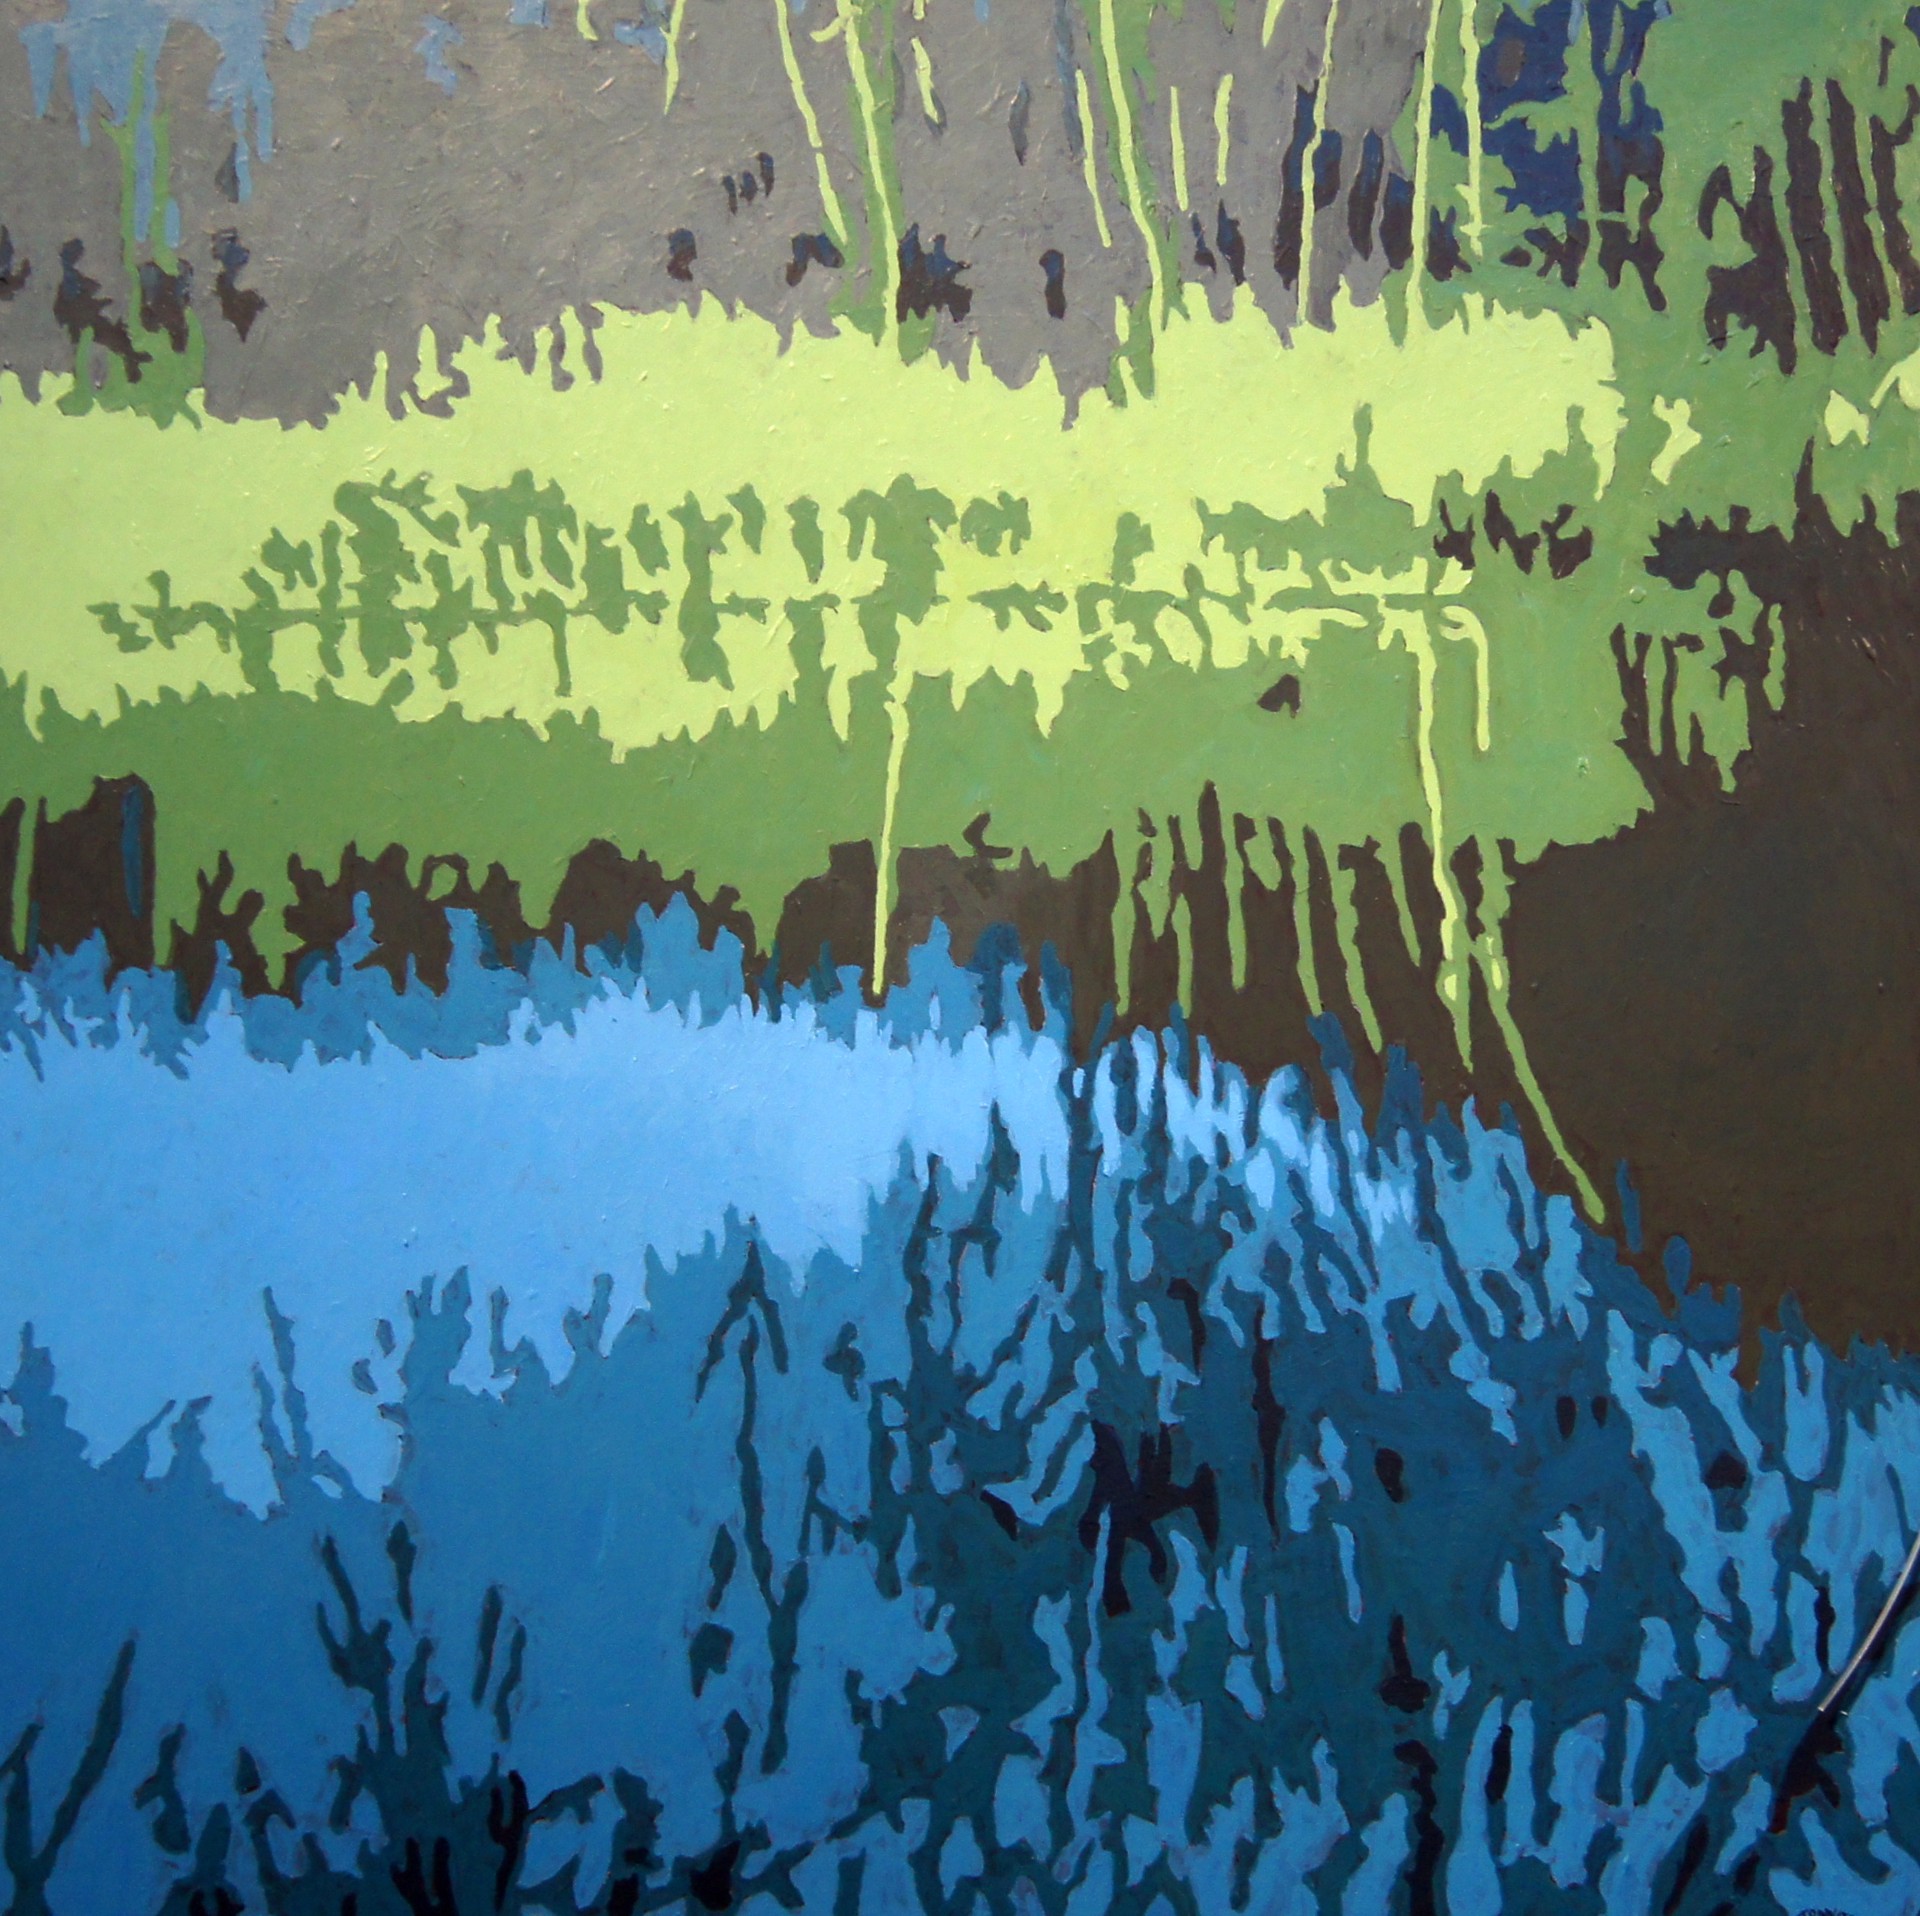 Along The Riverbank II by John Townsend